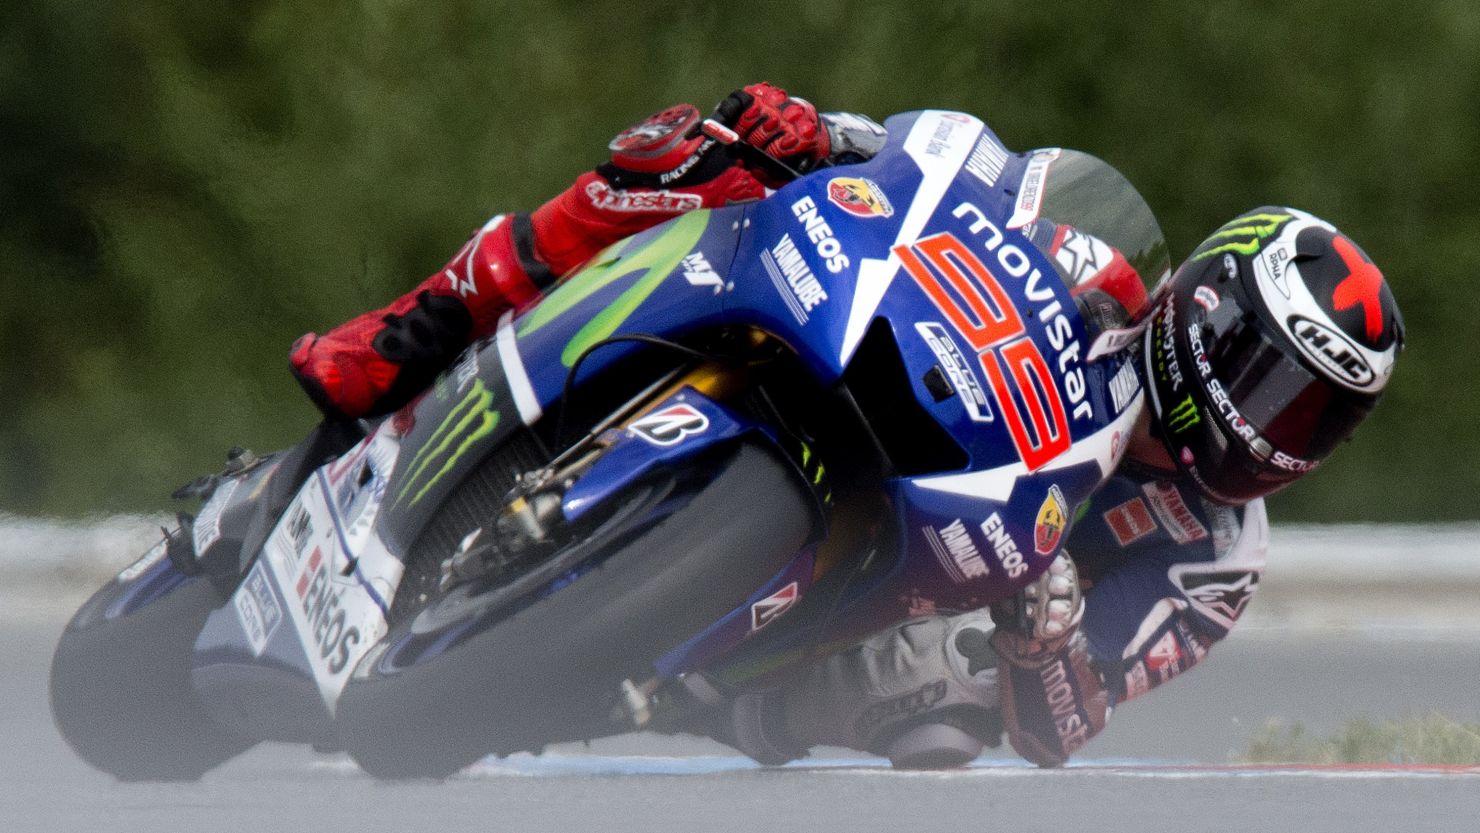 Jorge Lorenzo rides his motorbike during qualification for the Moto GP Czech Grand Prix in Brno, Czech Republic.